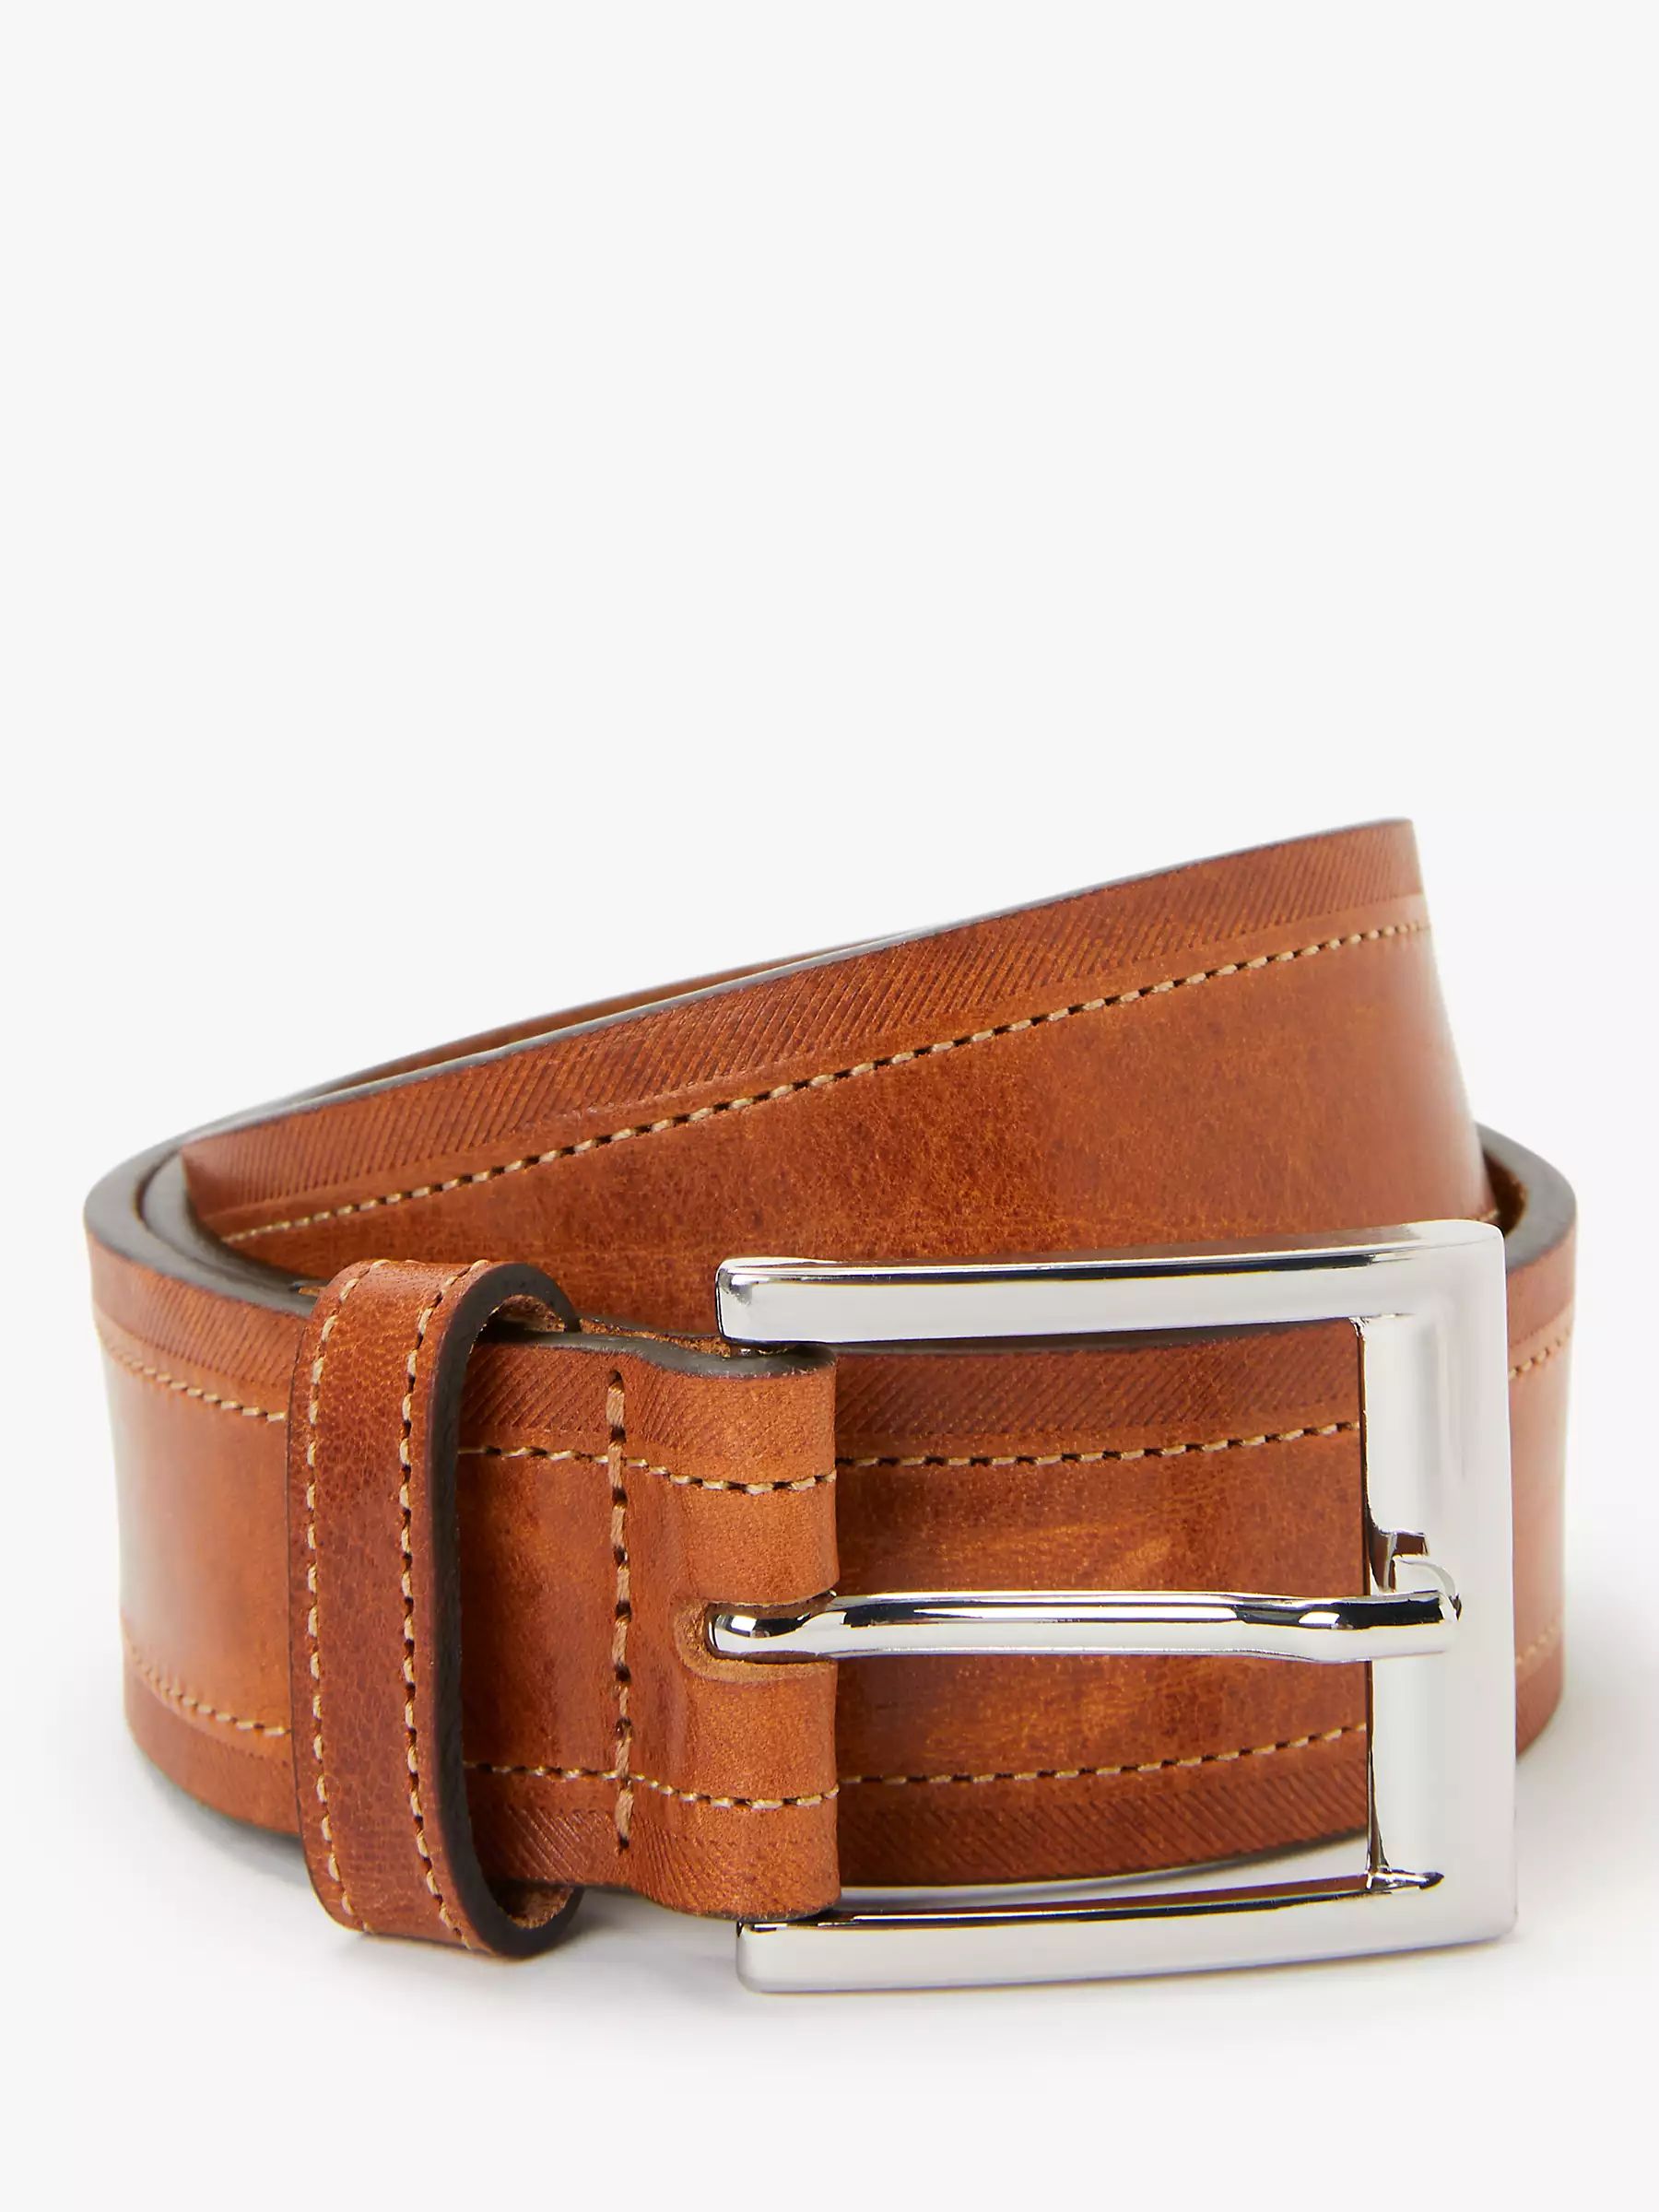 John Lewis & Partners Made in Italy Leather Chino Belt, Brown | John Lewis (UK)